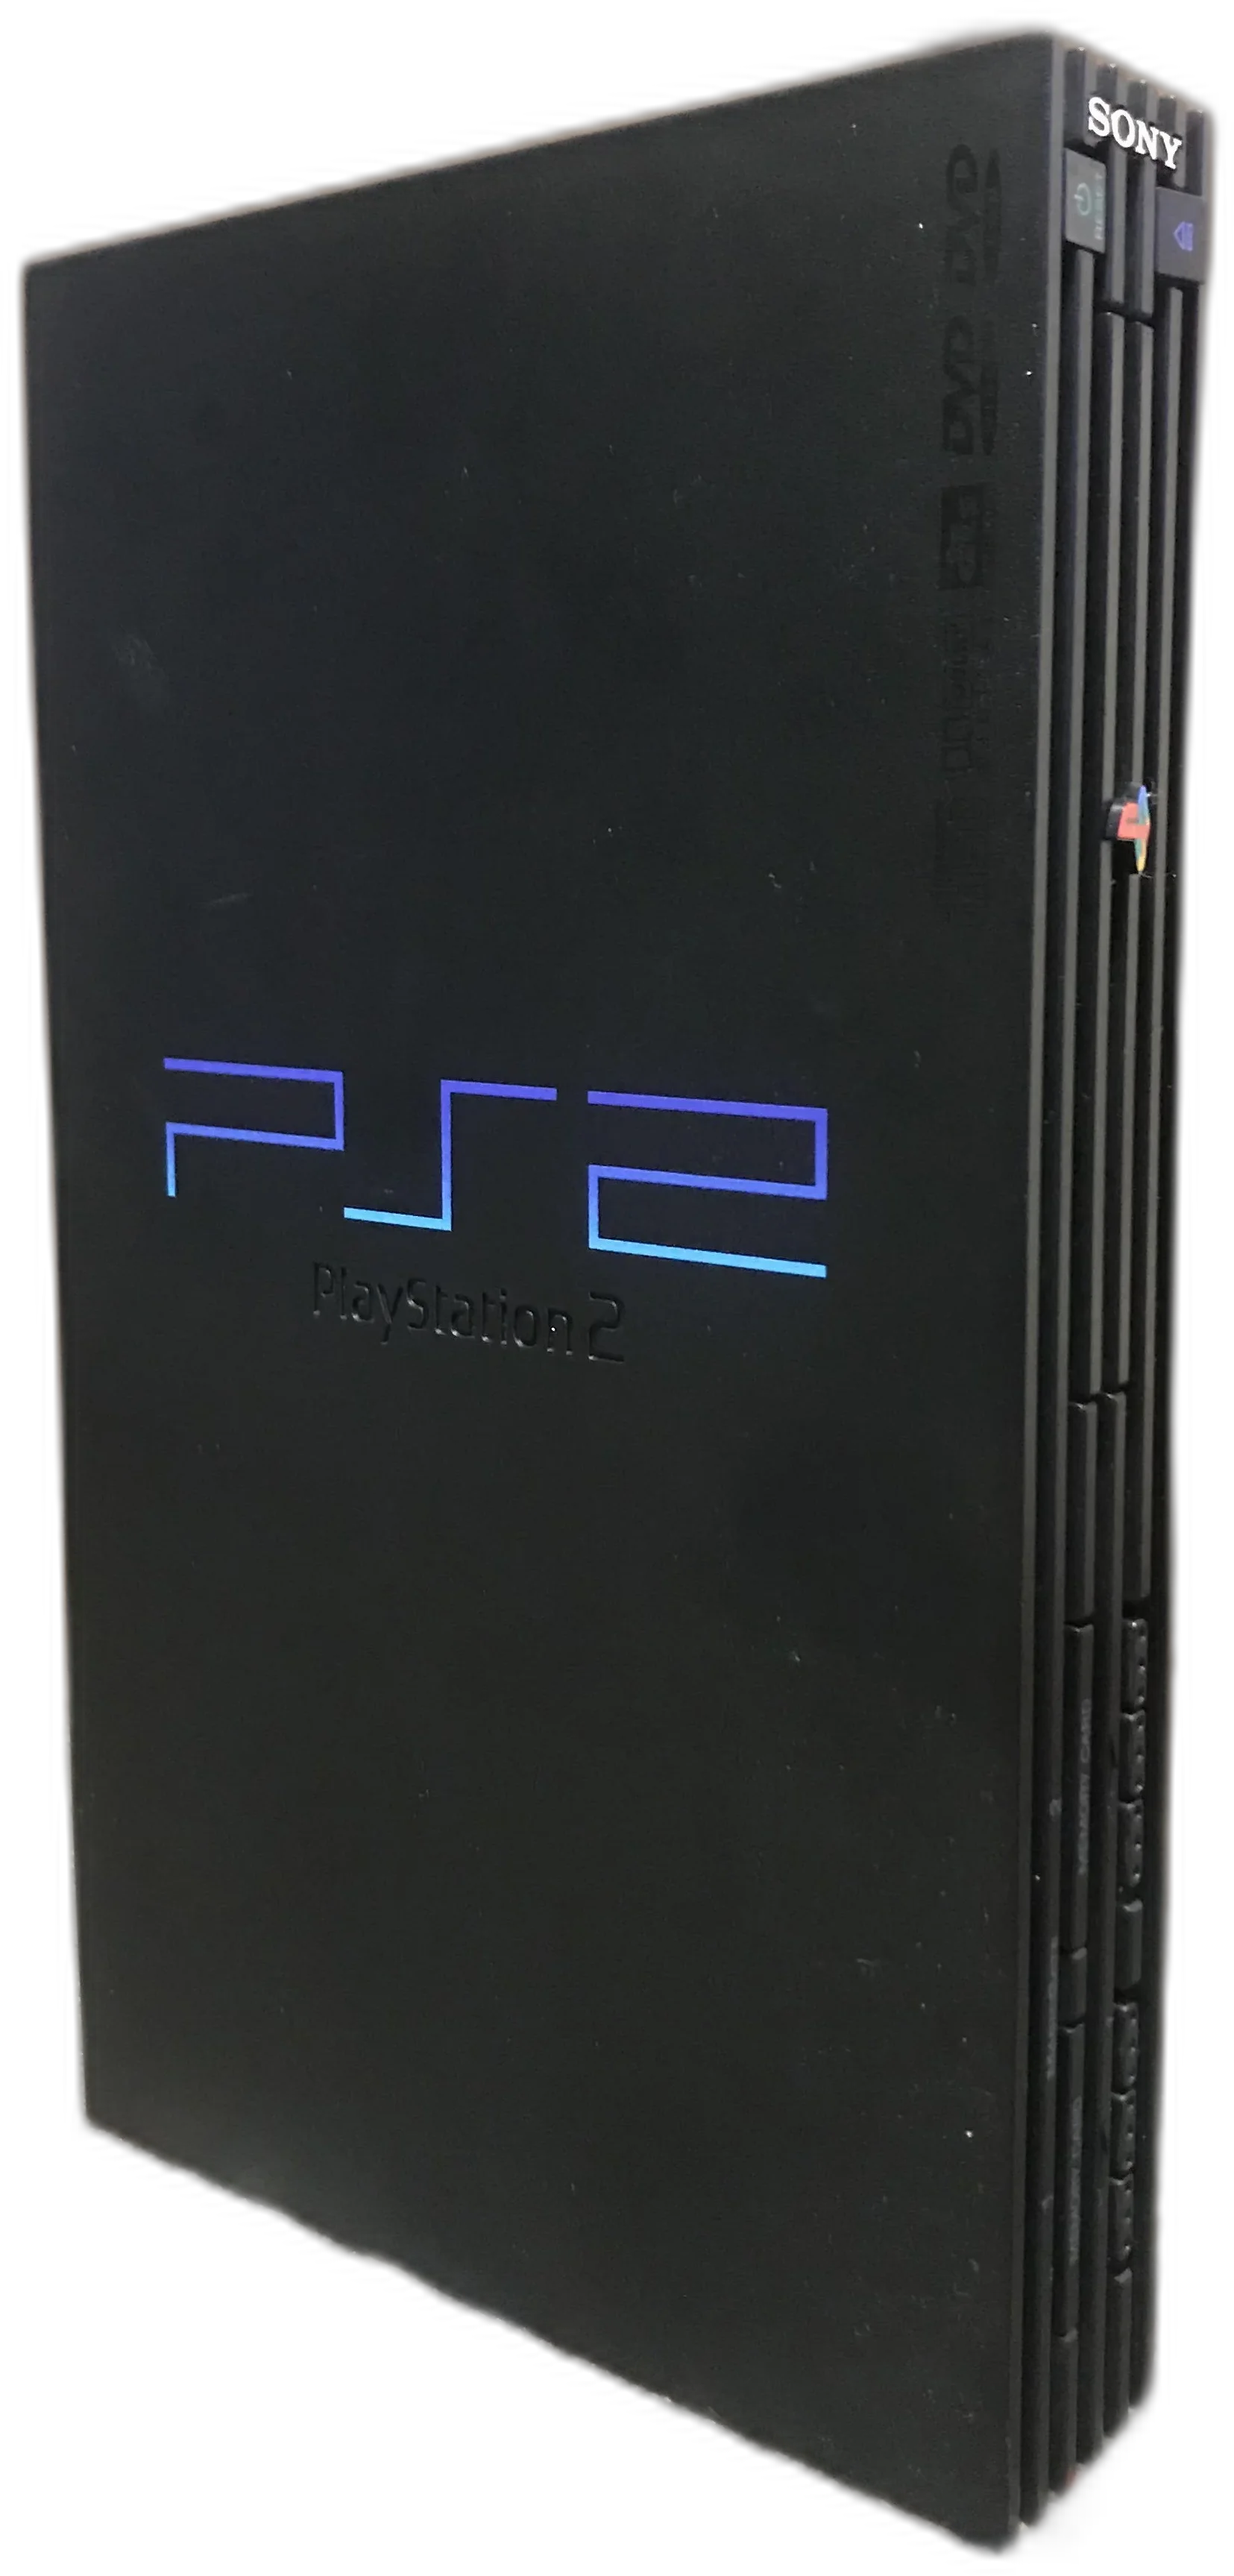  Sony PlayStation 2 Black Console [JP]